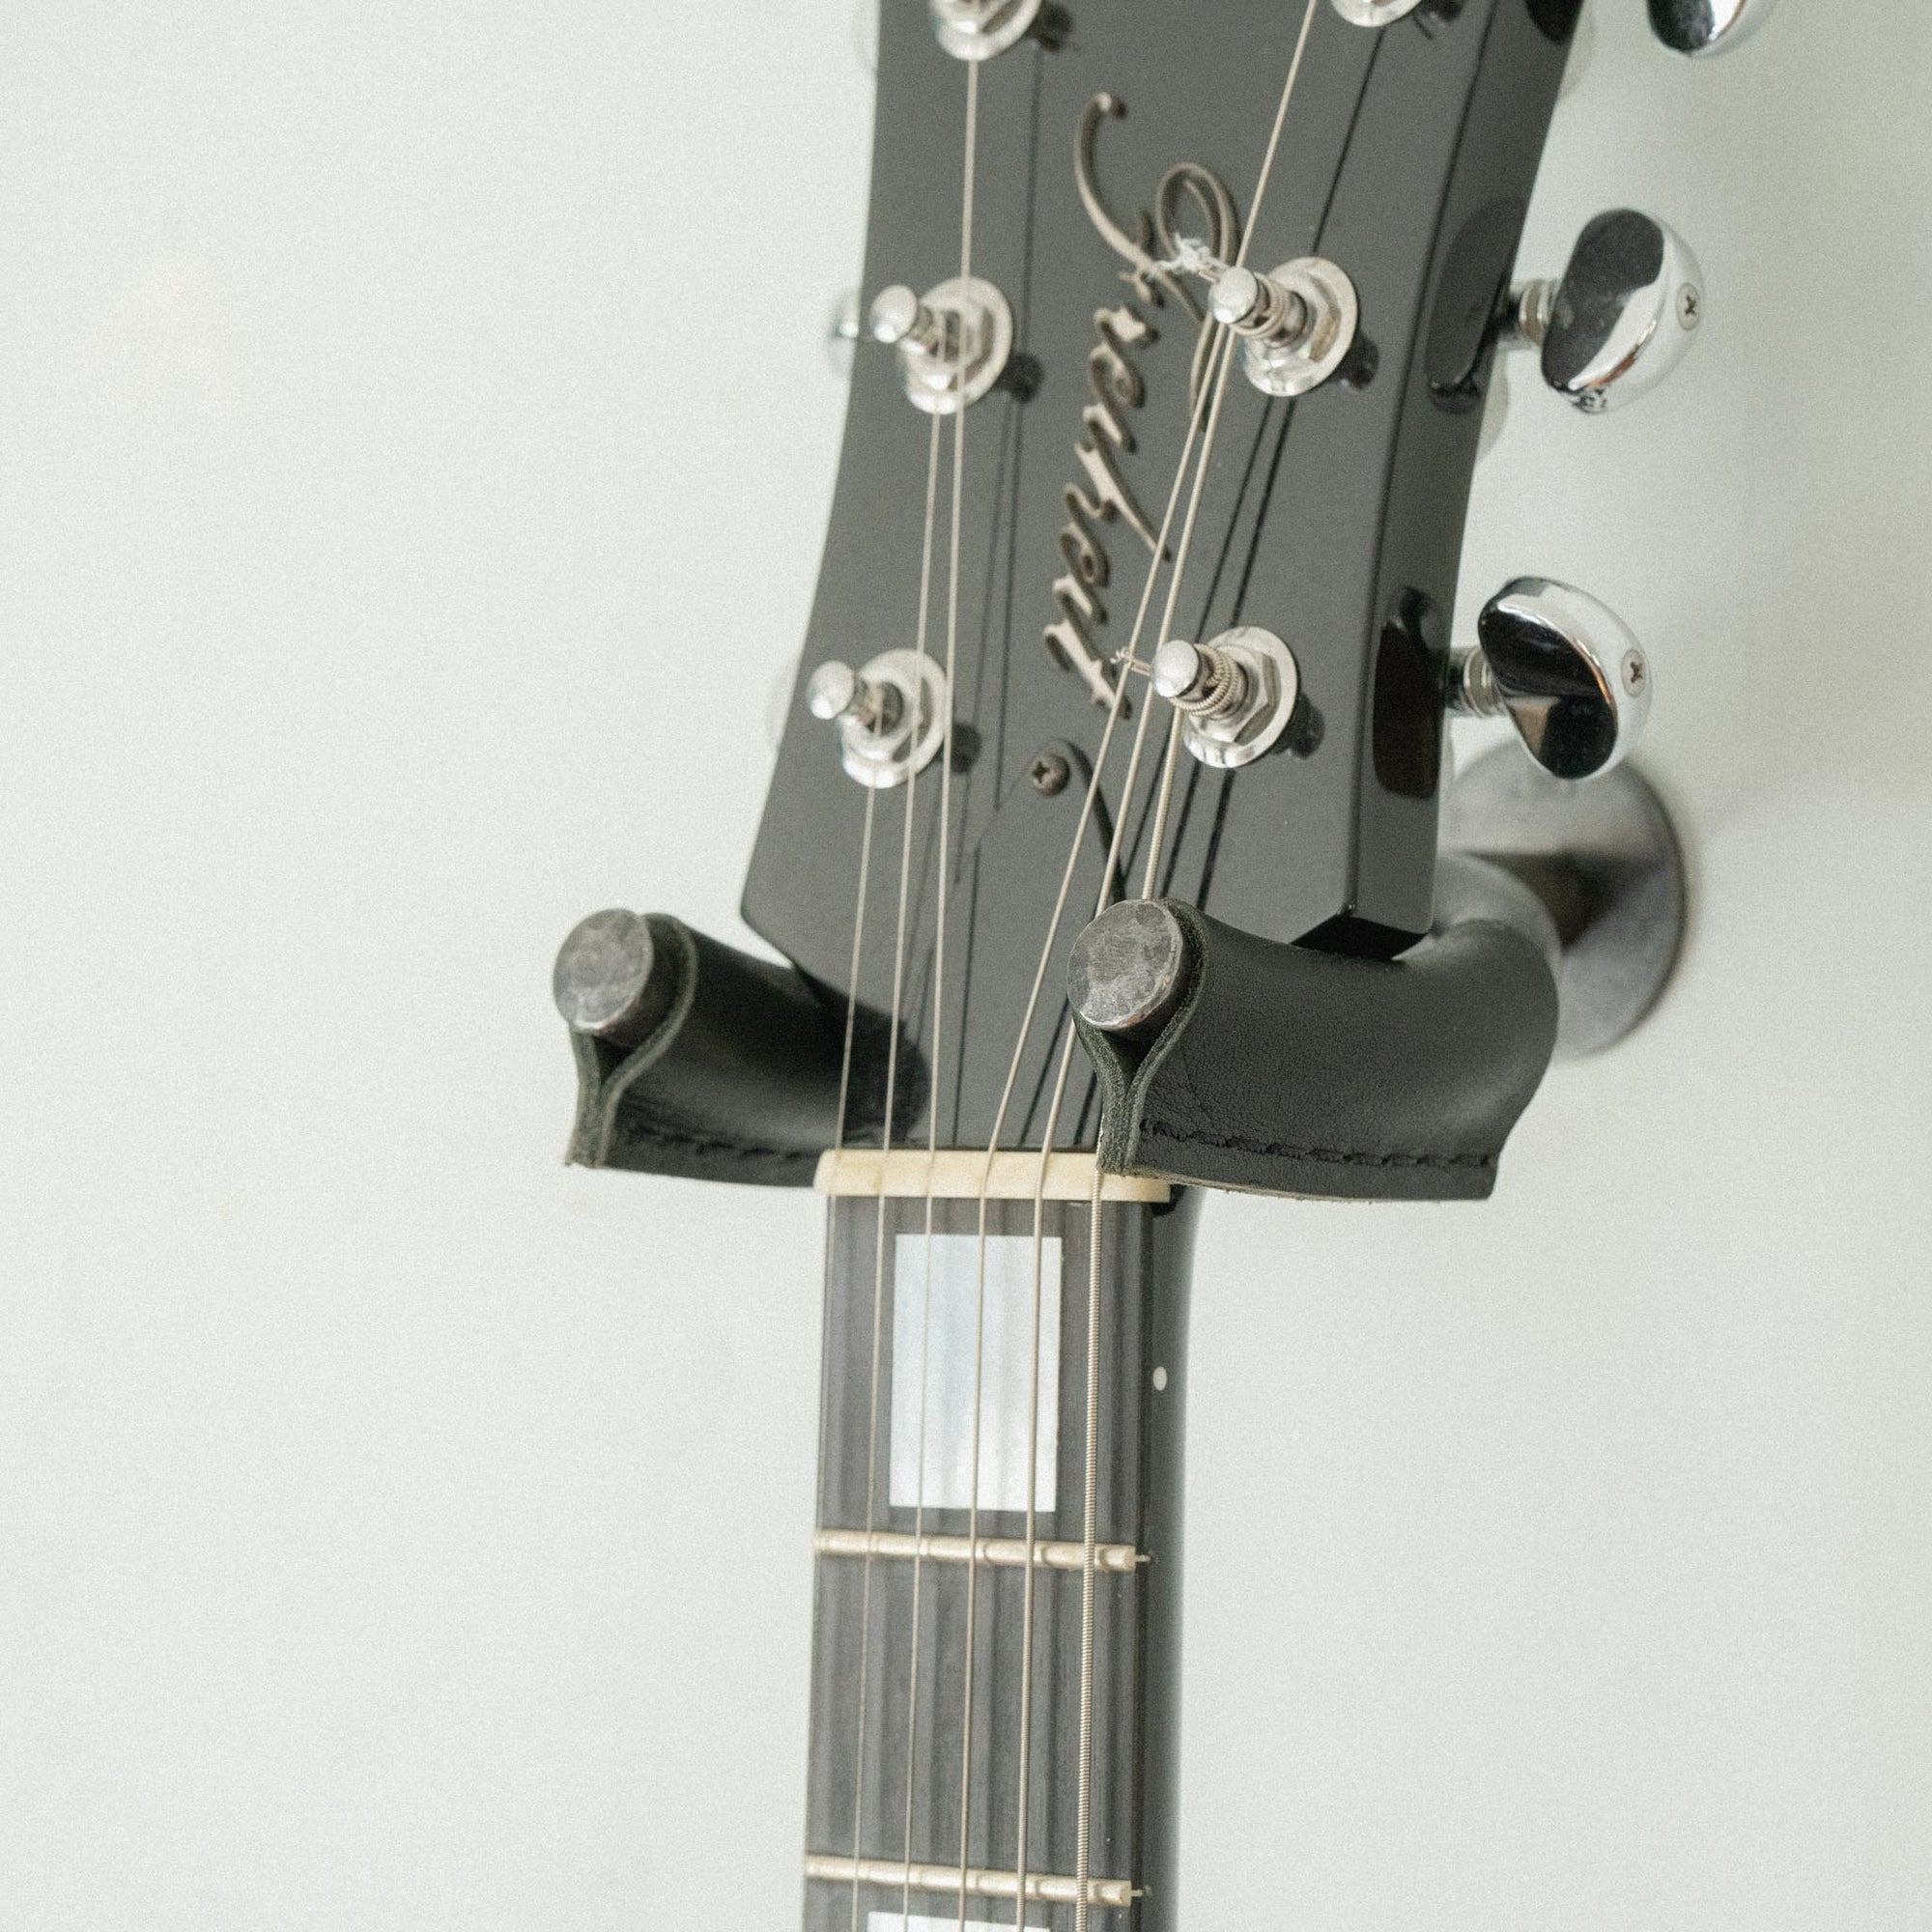 Guitar Hanger